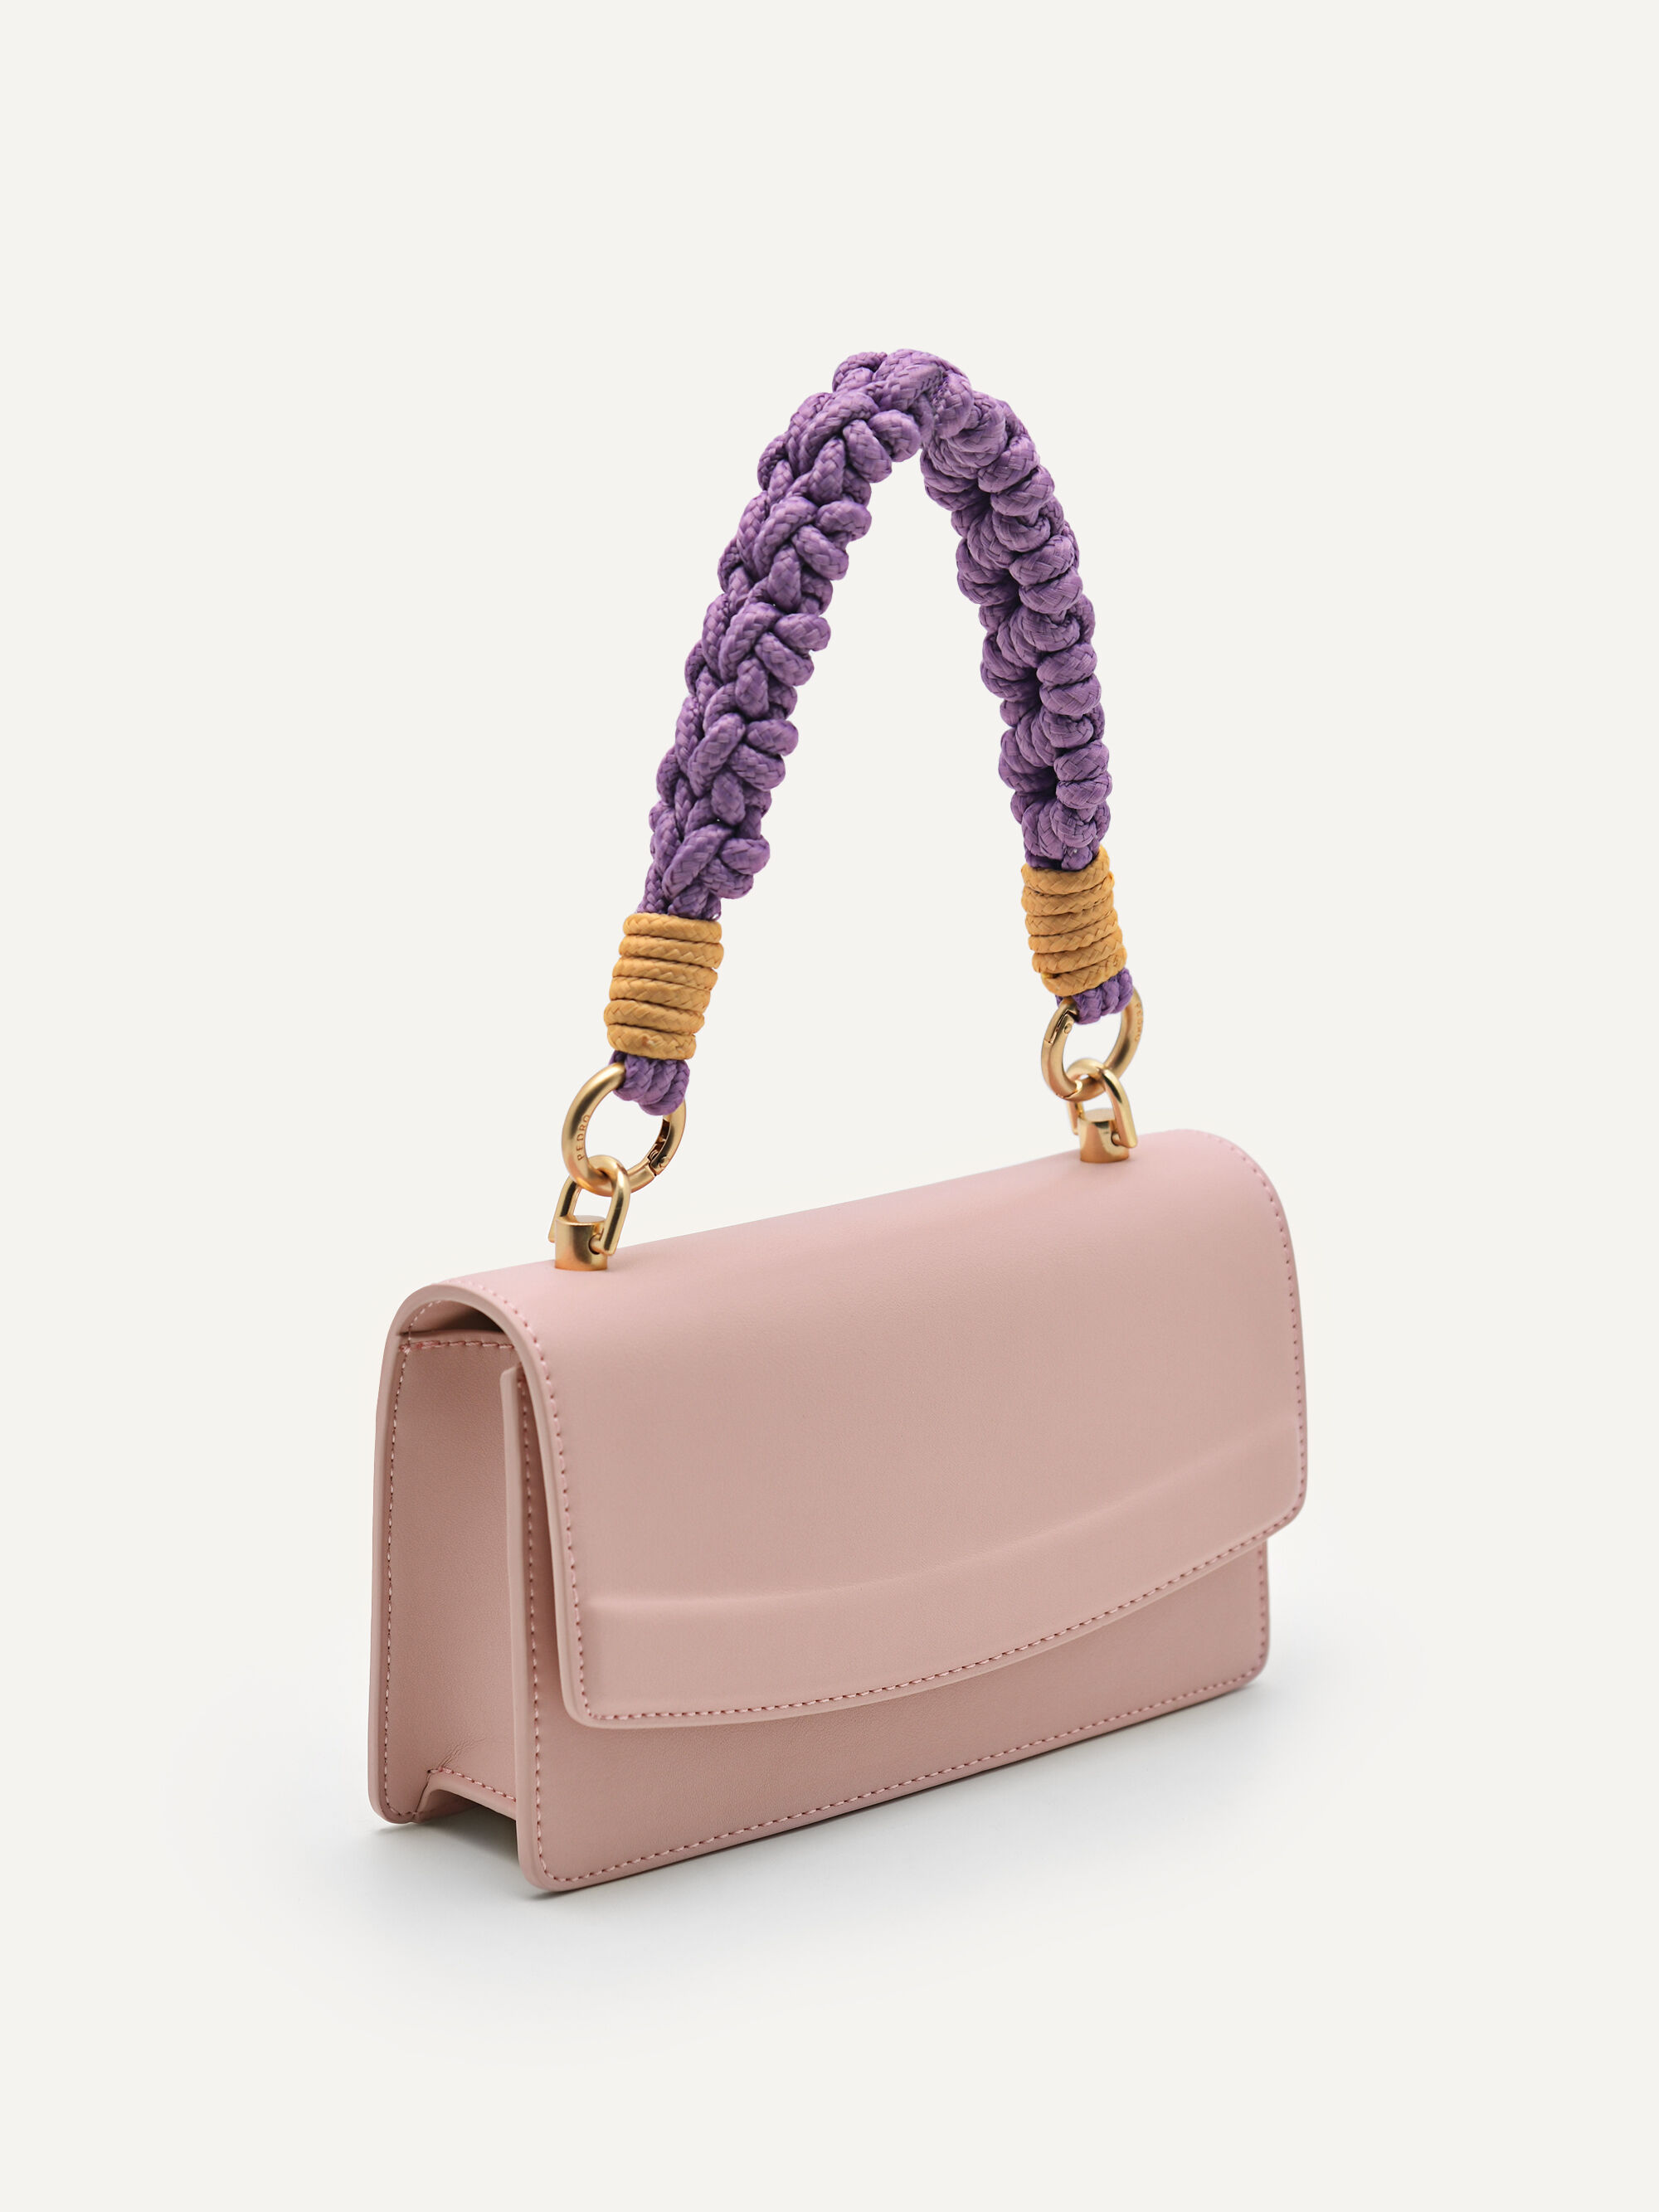 Toàn cảnh chiếc Pedro Shoulder Bag with Braided Handle - Light Pink